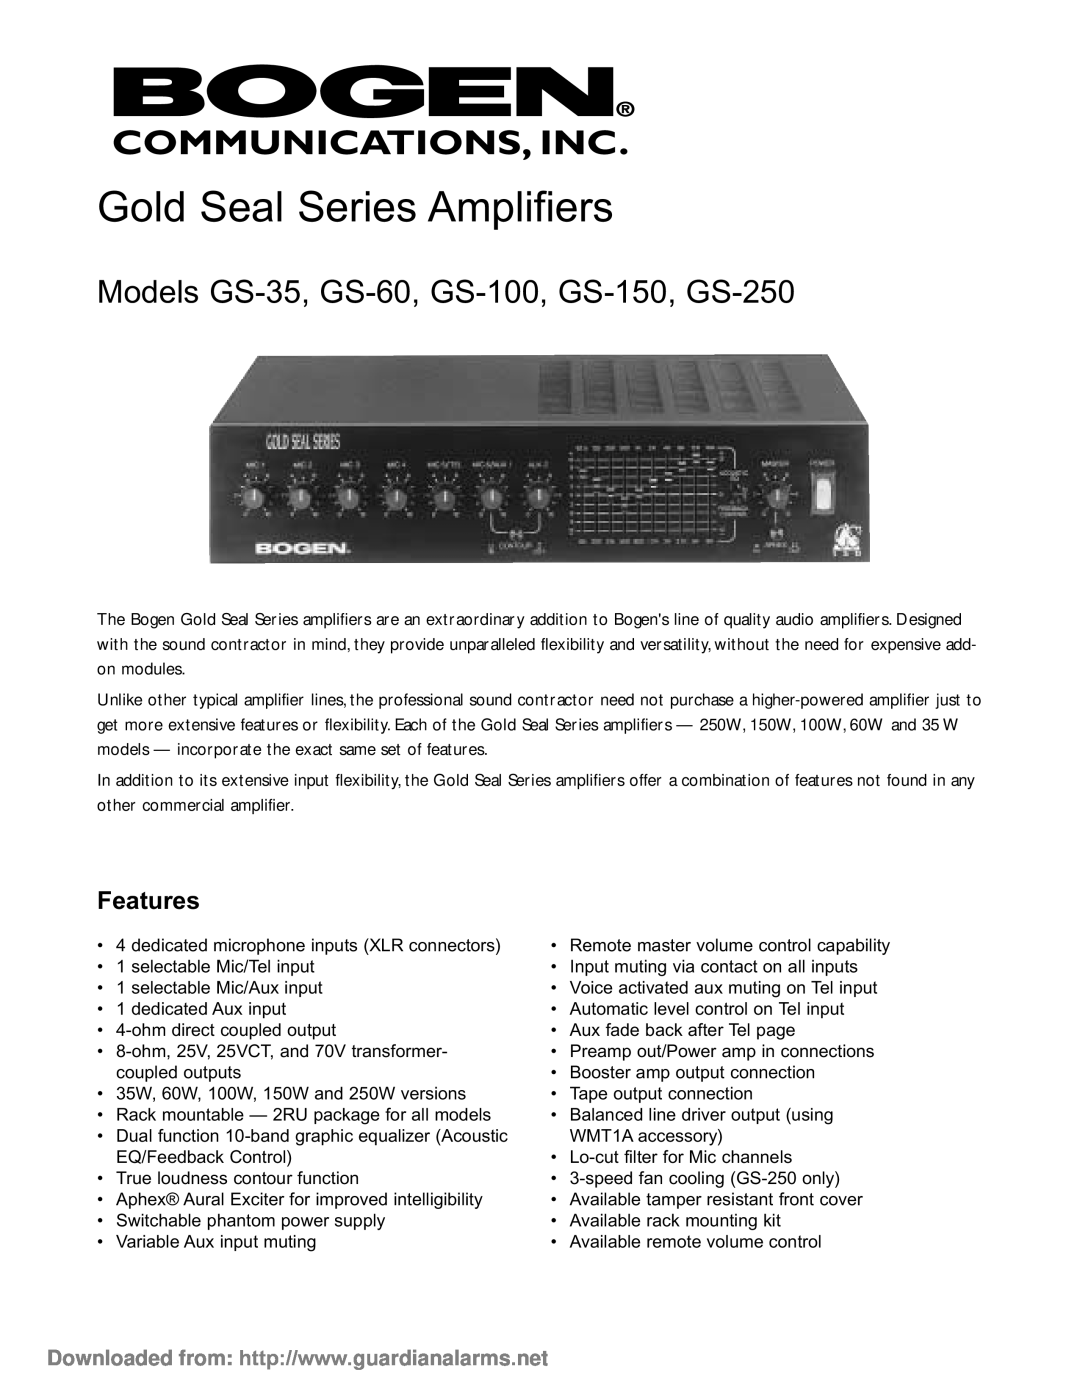 Bogen manual Features, Gold Seal Series Amplifiers, Models GS-35, GS-60, GS-100, GS-150, GS-250 